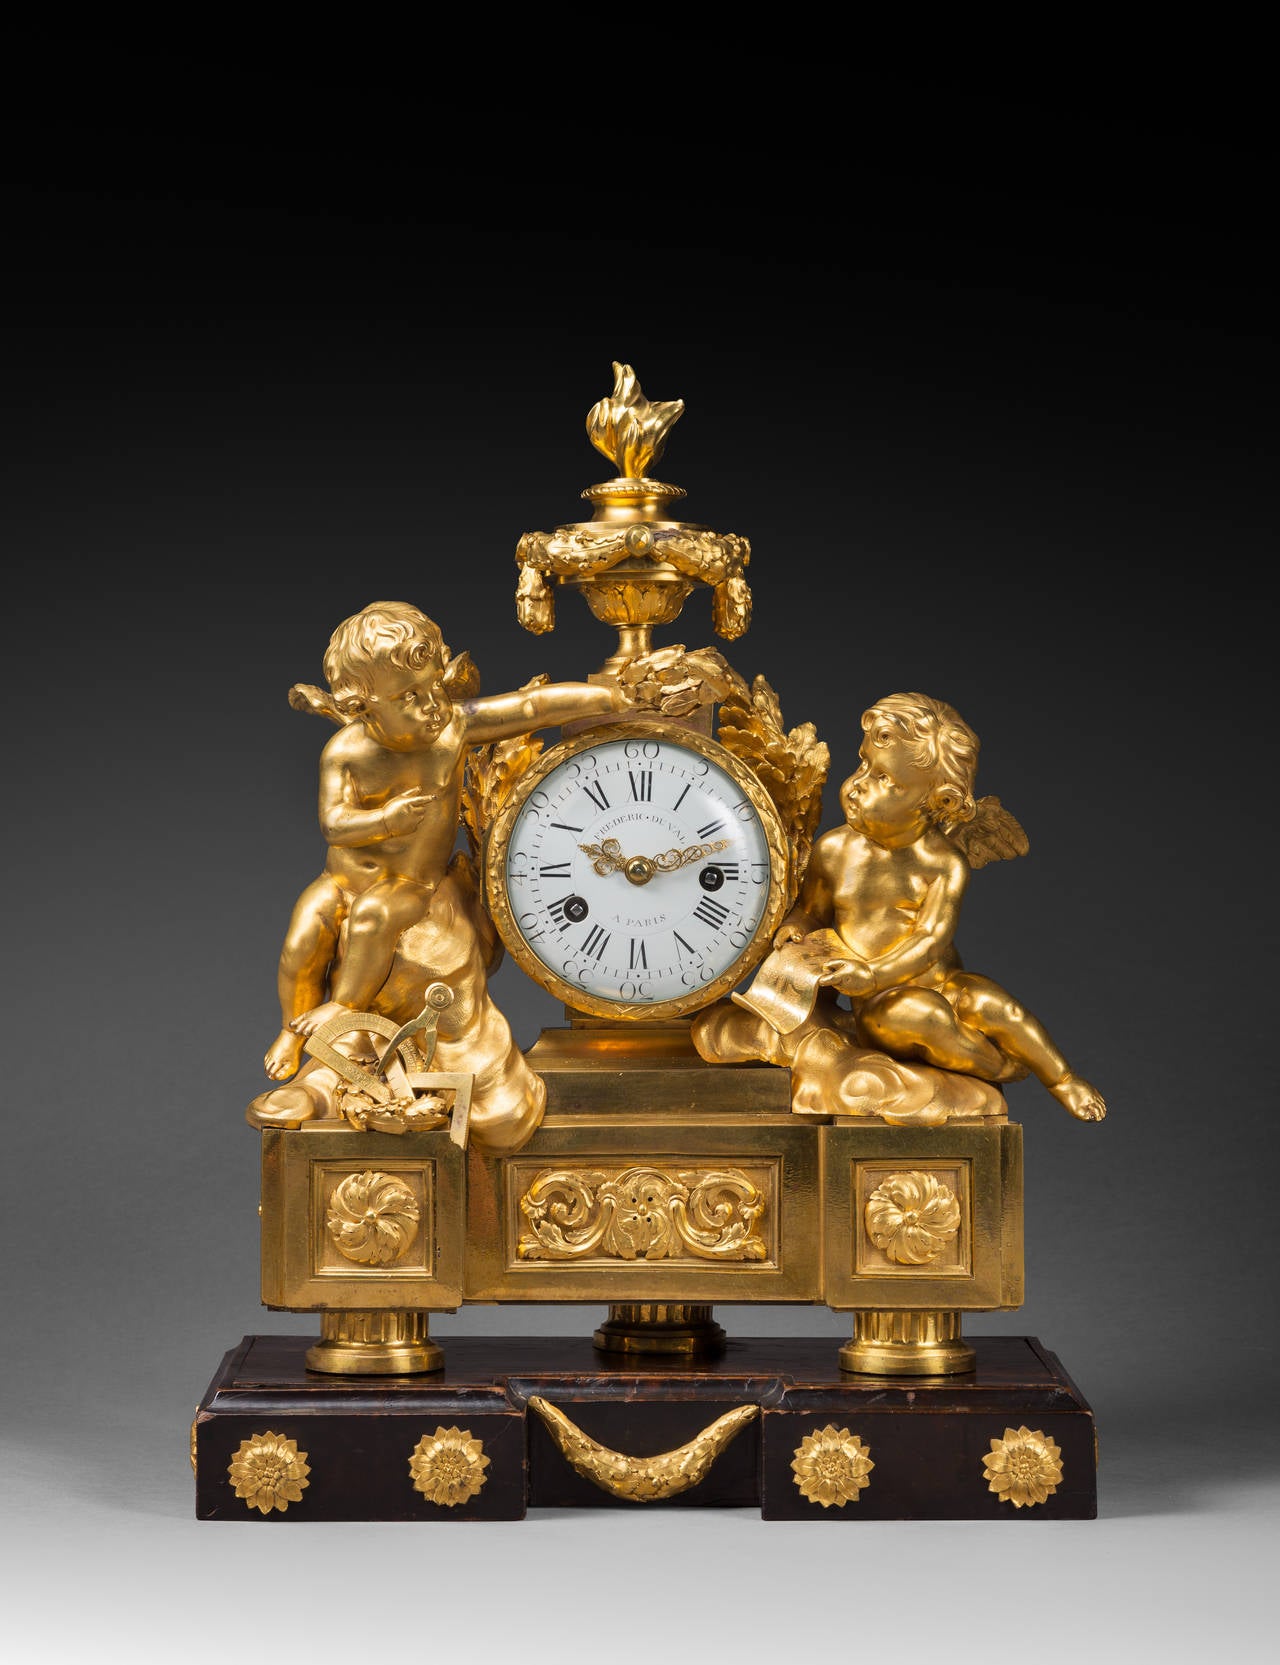 Frédéric Duval, Case Attributed to Jean-Joseph de Saint-Germain 

Rare Chased Gilt Bronze Neo-Classical Clock
Allegory of the Sciences

Paris, early Louis XVI period, circa 1775
Height 44 cm; width 37.5 cm; depth 14.5 cm